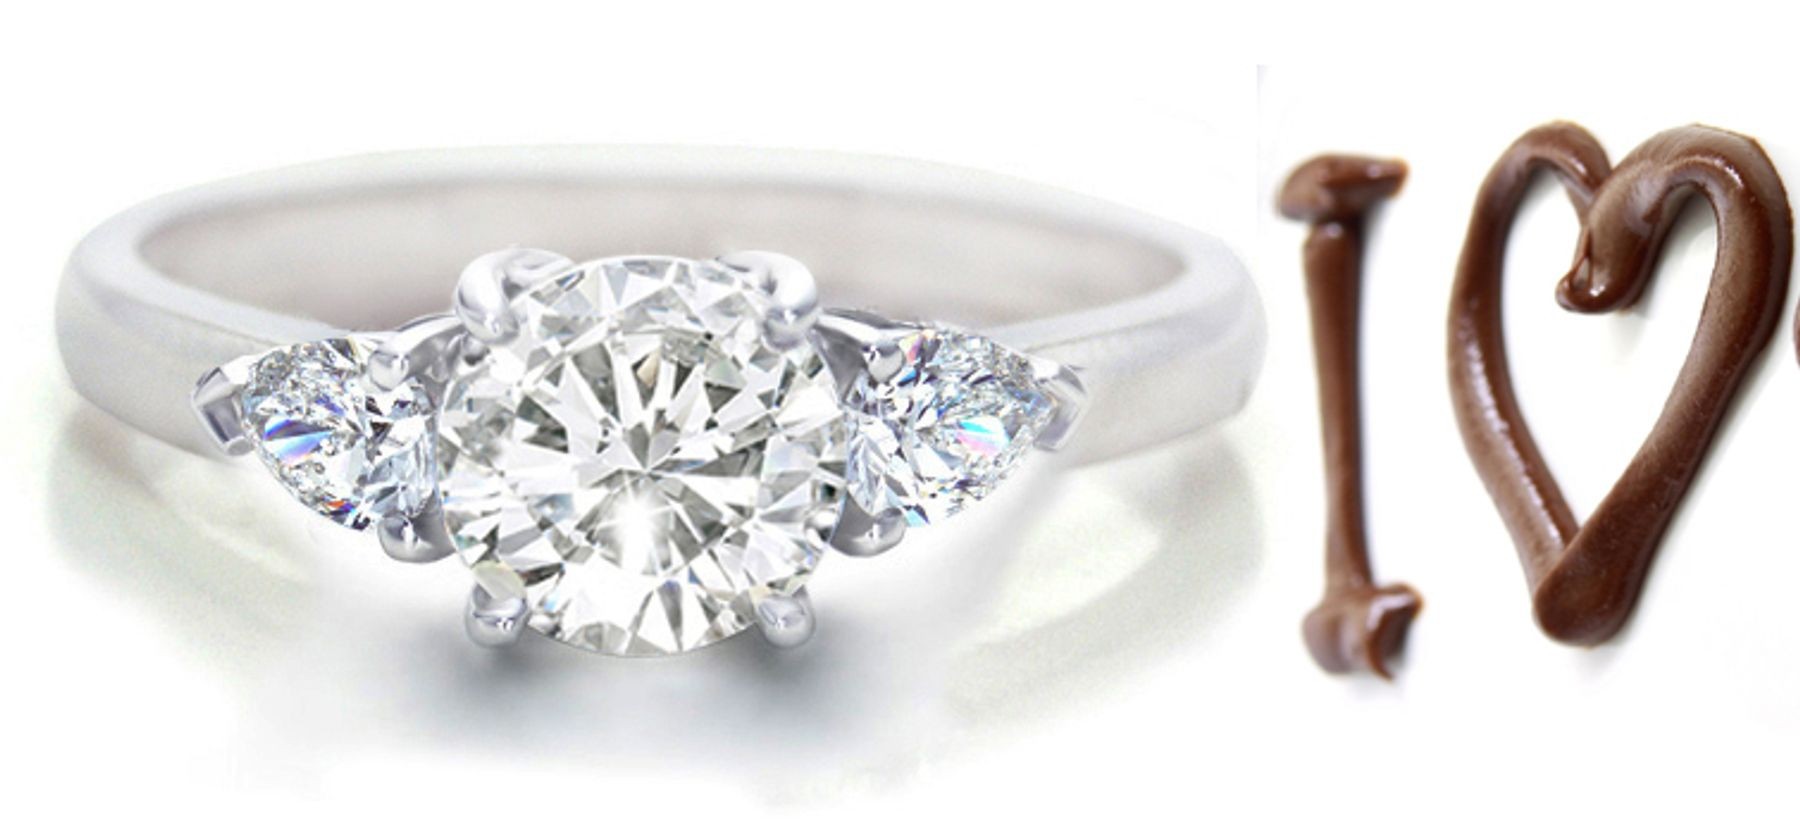 Anniversary Diamond Rings: Present 3-Stone Rings (Center Round & Side Pear Shaped Diamonds) in Platinum & 14K White Yellow Gold. 